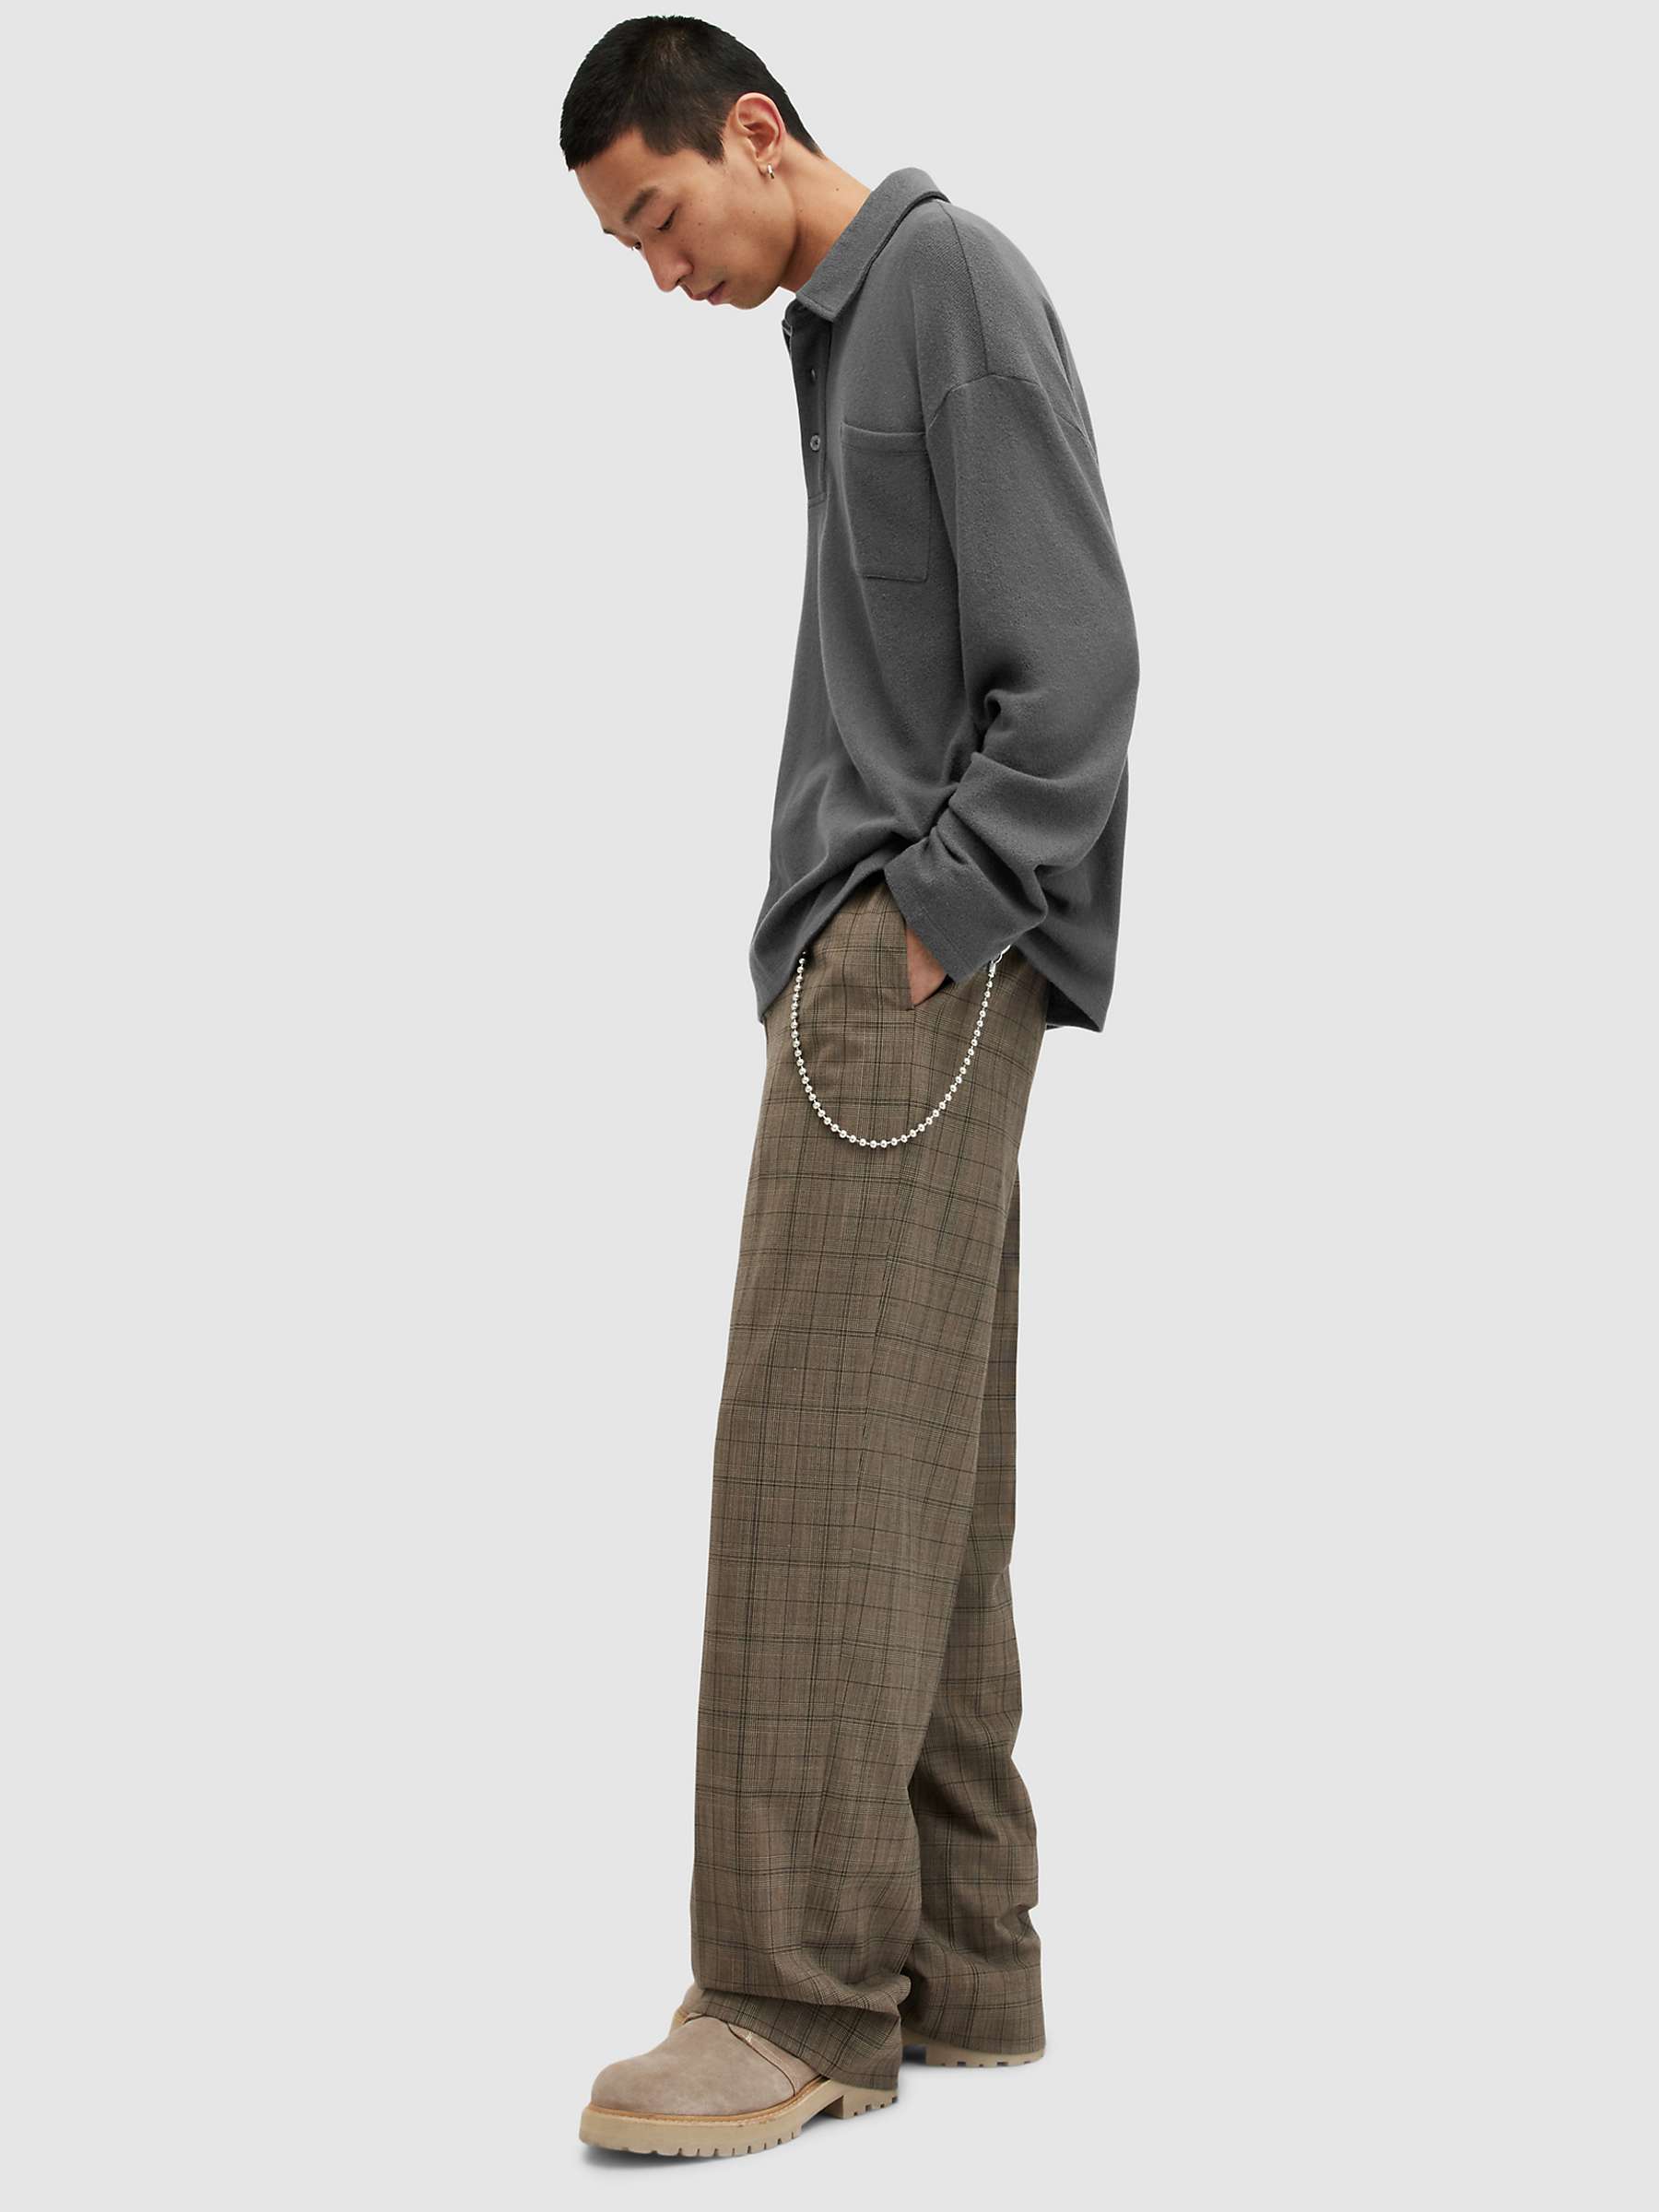 Buy AllSaints Eris Long Sleeve Polo Shirt, Washed Black Online at johnlewis.com